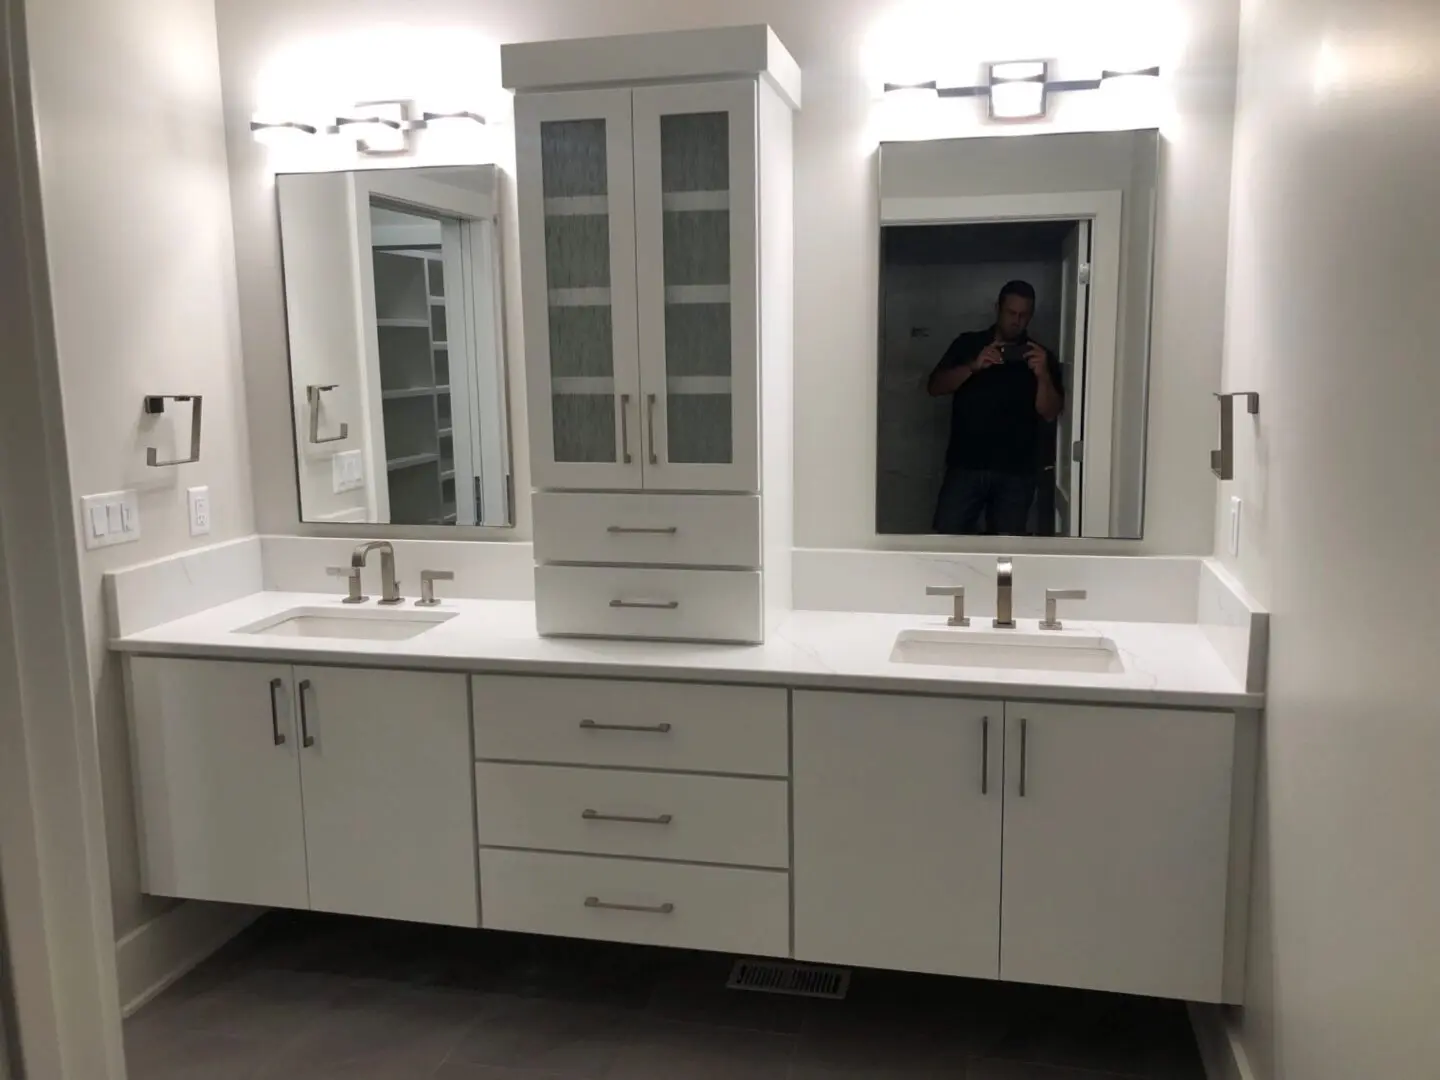 Front lighted LED bathroom Vanity mirror decor